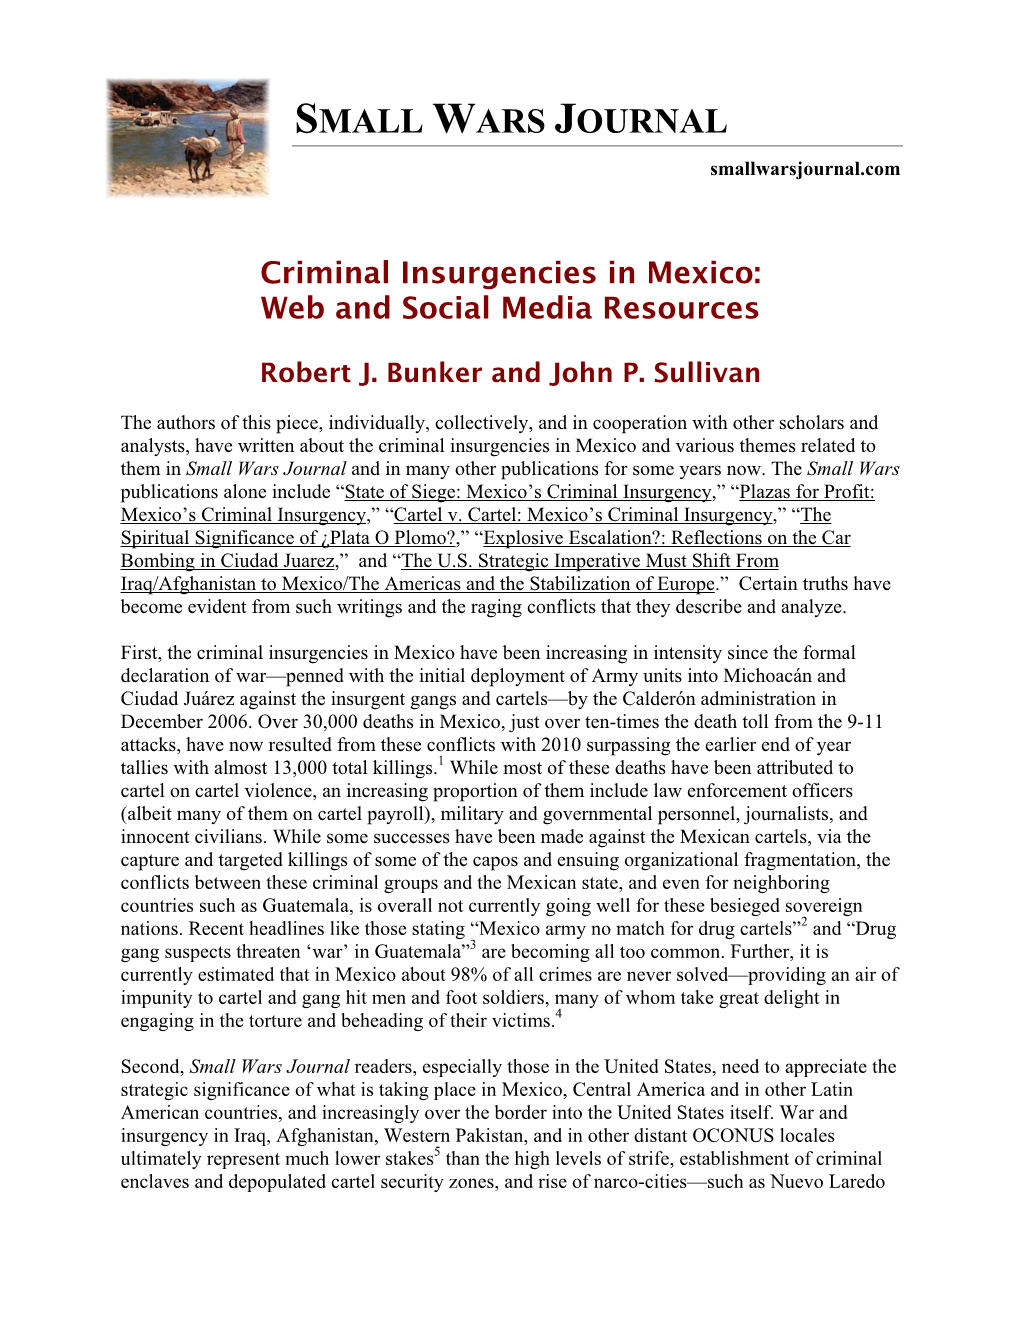 Criminal Insurgencies in Mexico: Web and Social Media Resources